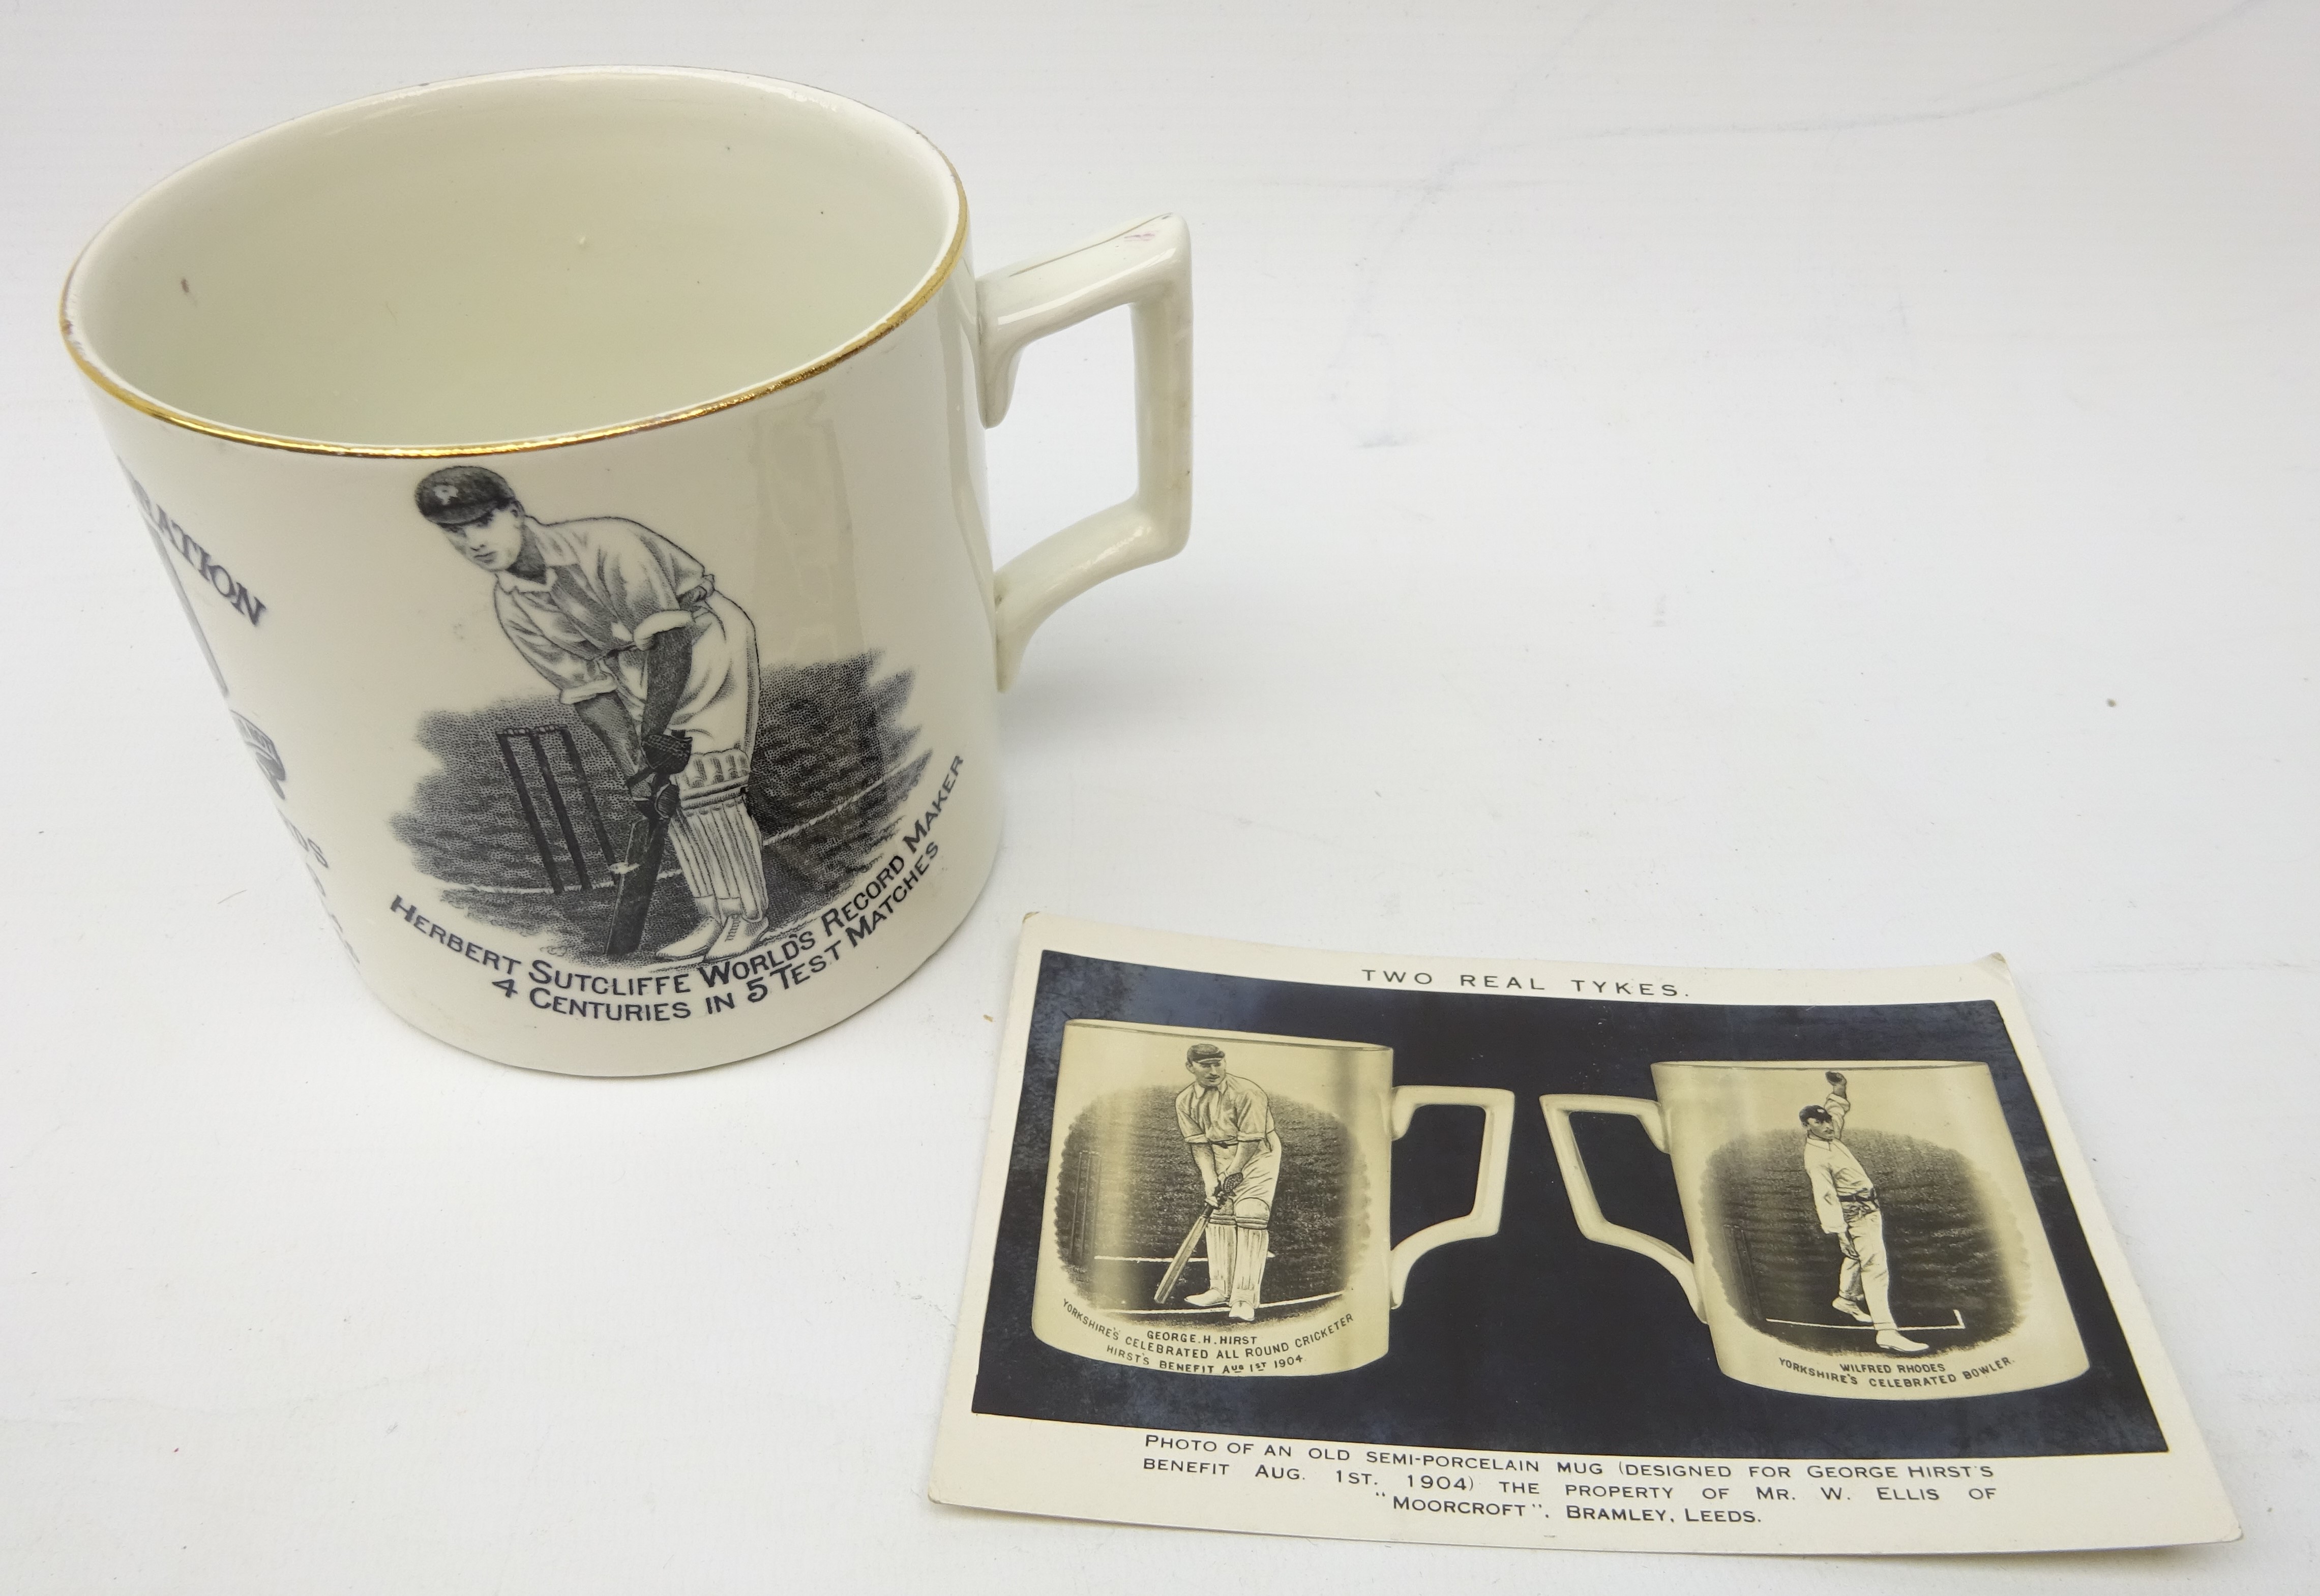 Cricket - Pudsey Corporation Commemorative transfer printed mug for 'Herbert Sutcliffe World Record